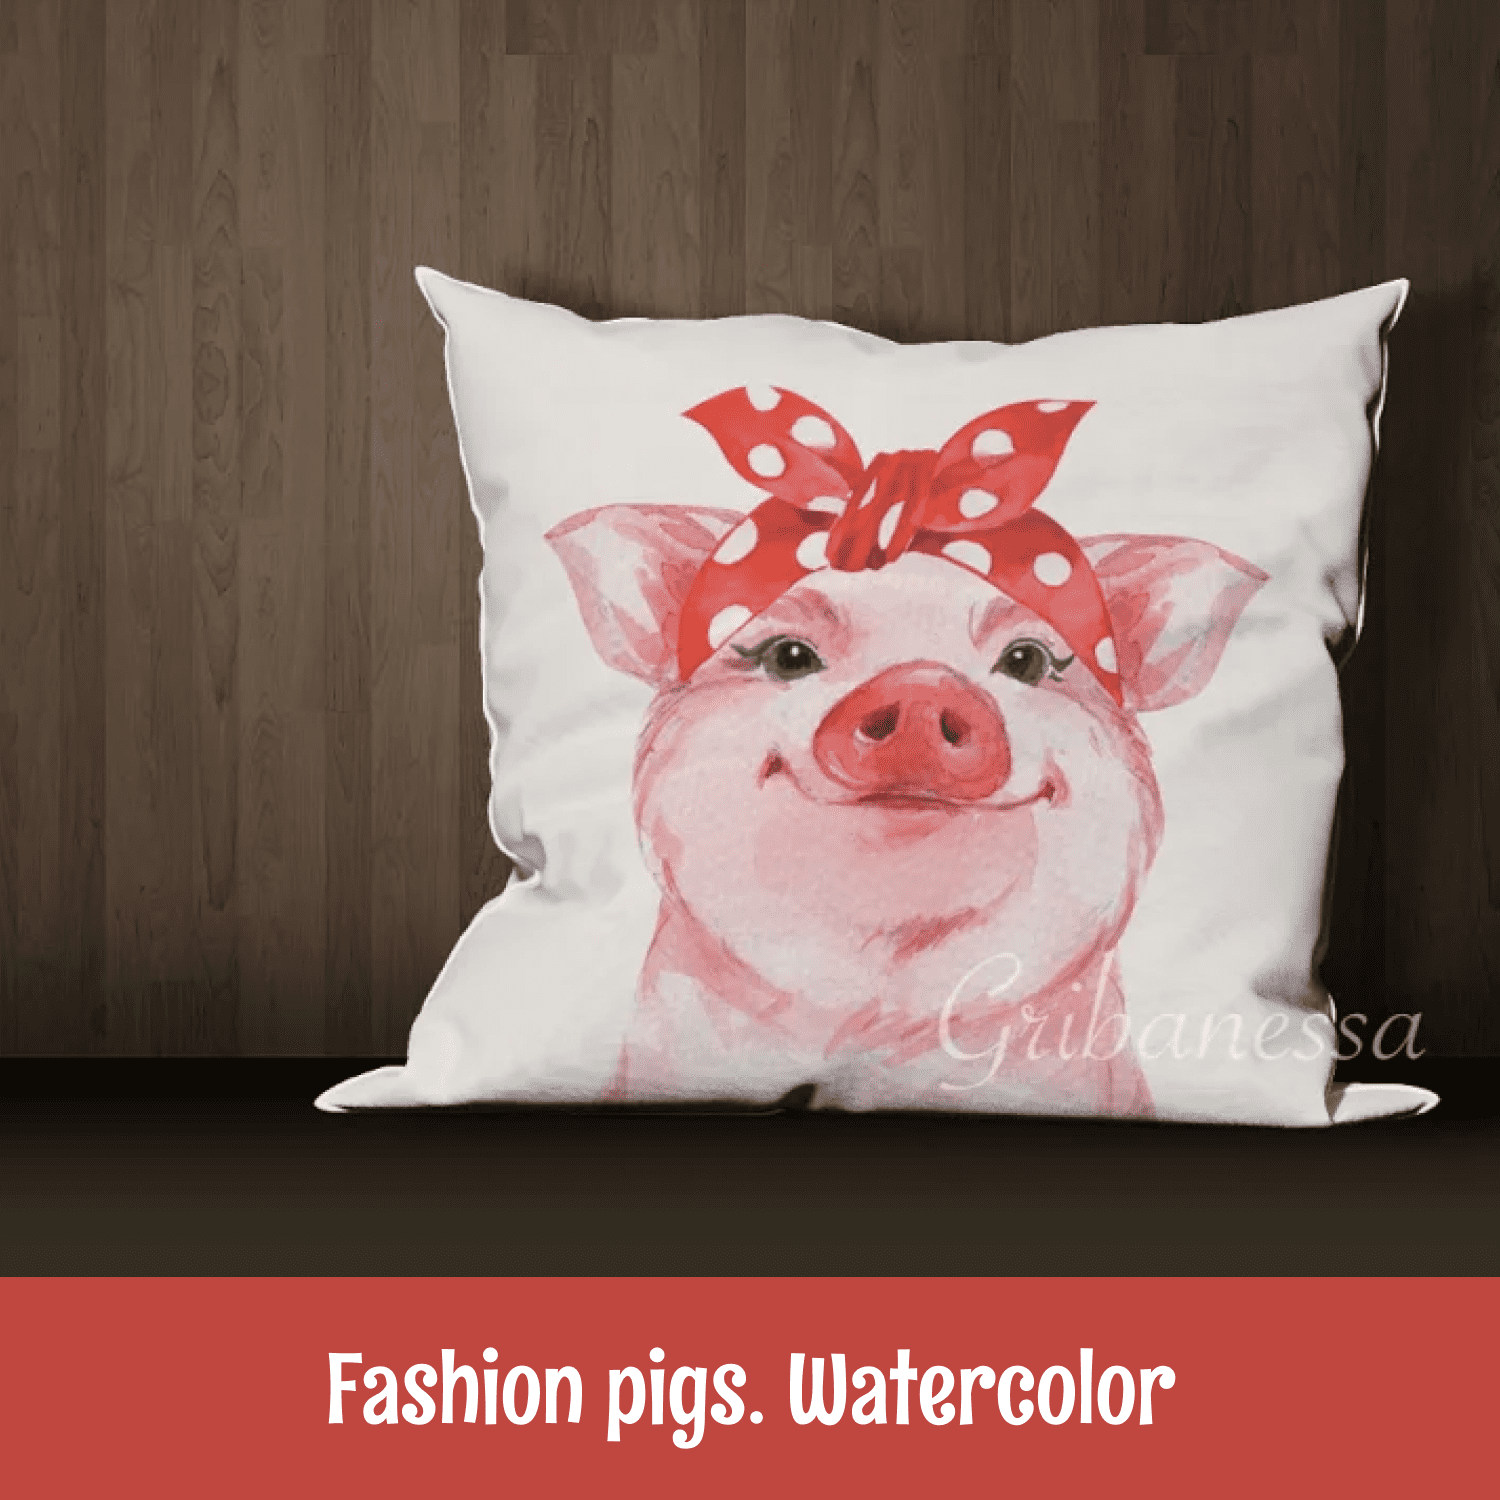 Fashion pigs. Watercolor cover.